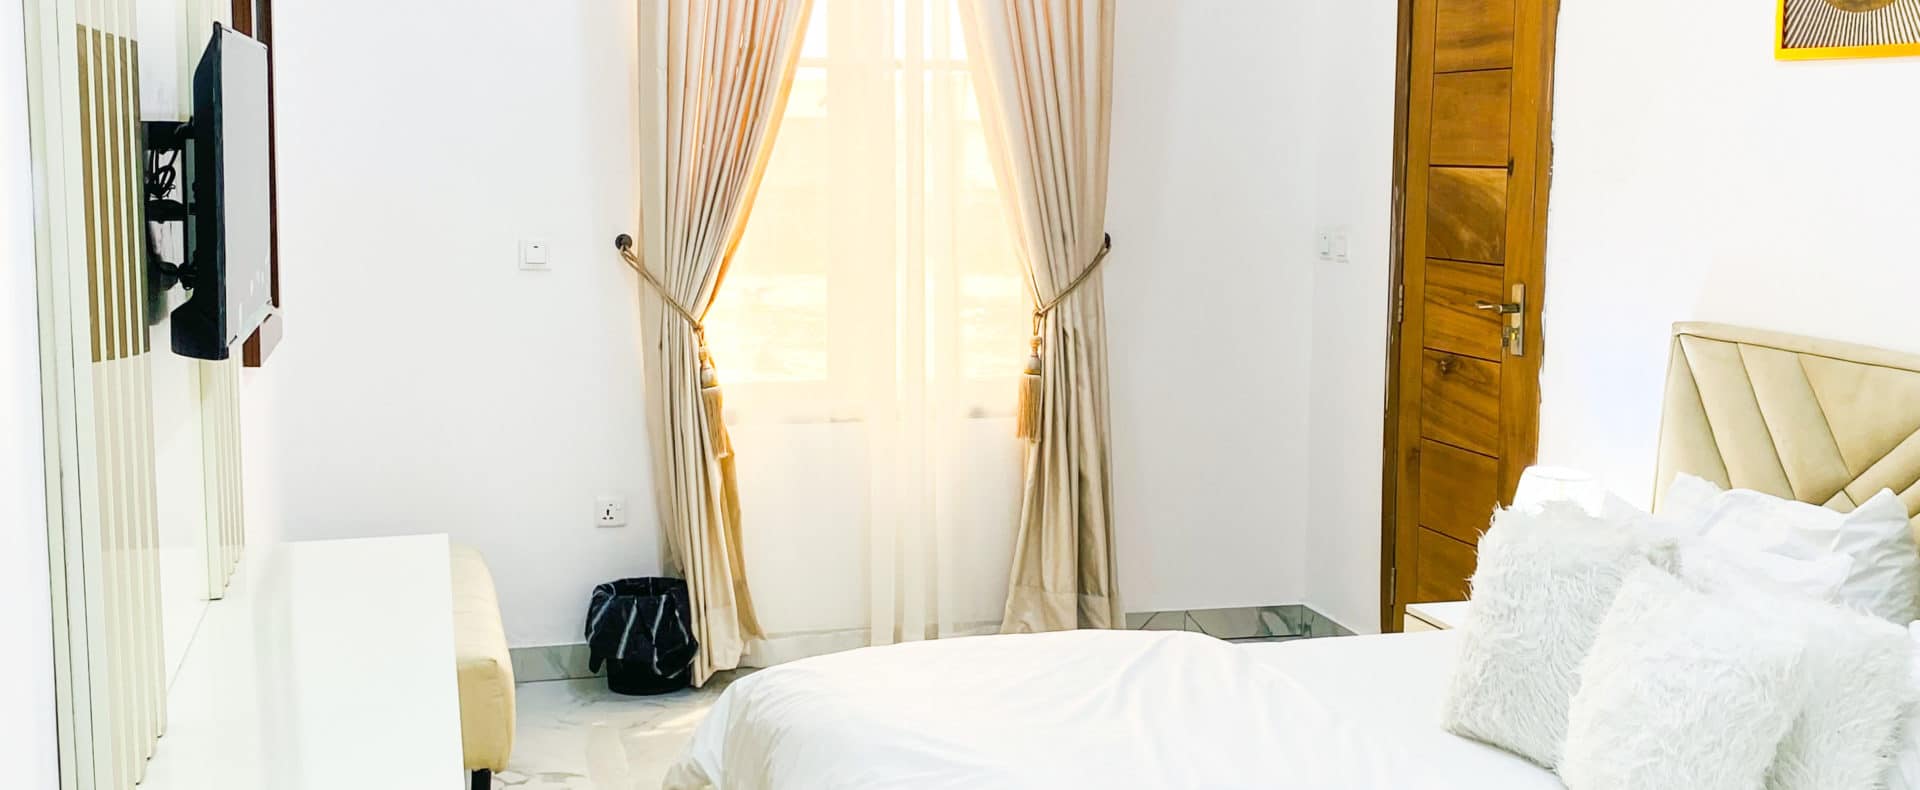 Luxury Private Two Bedroom Apartment In Lekki Short Let Nigeria